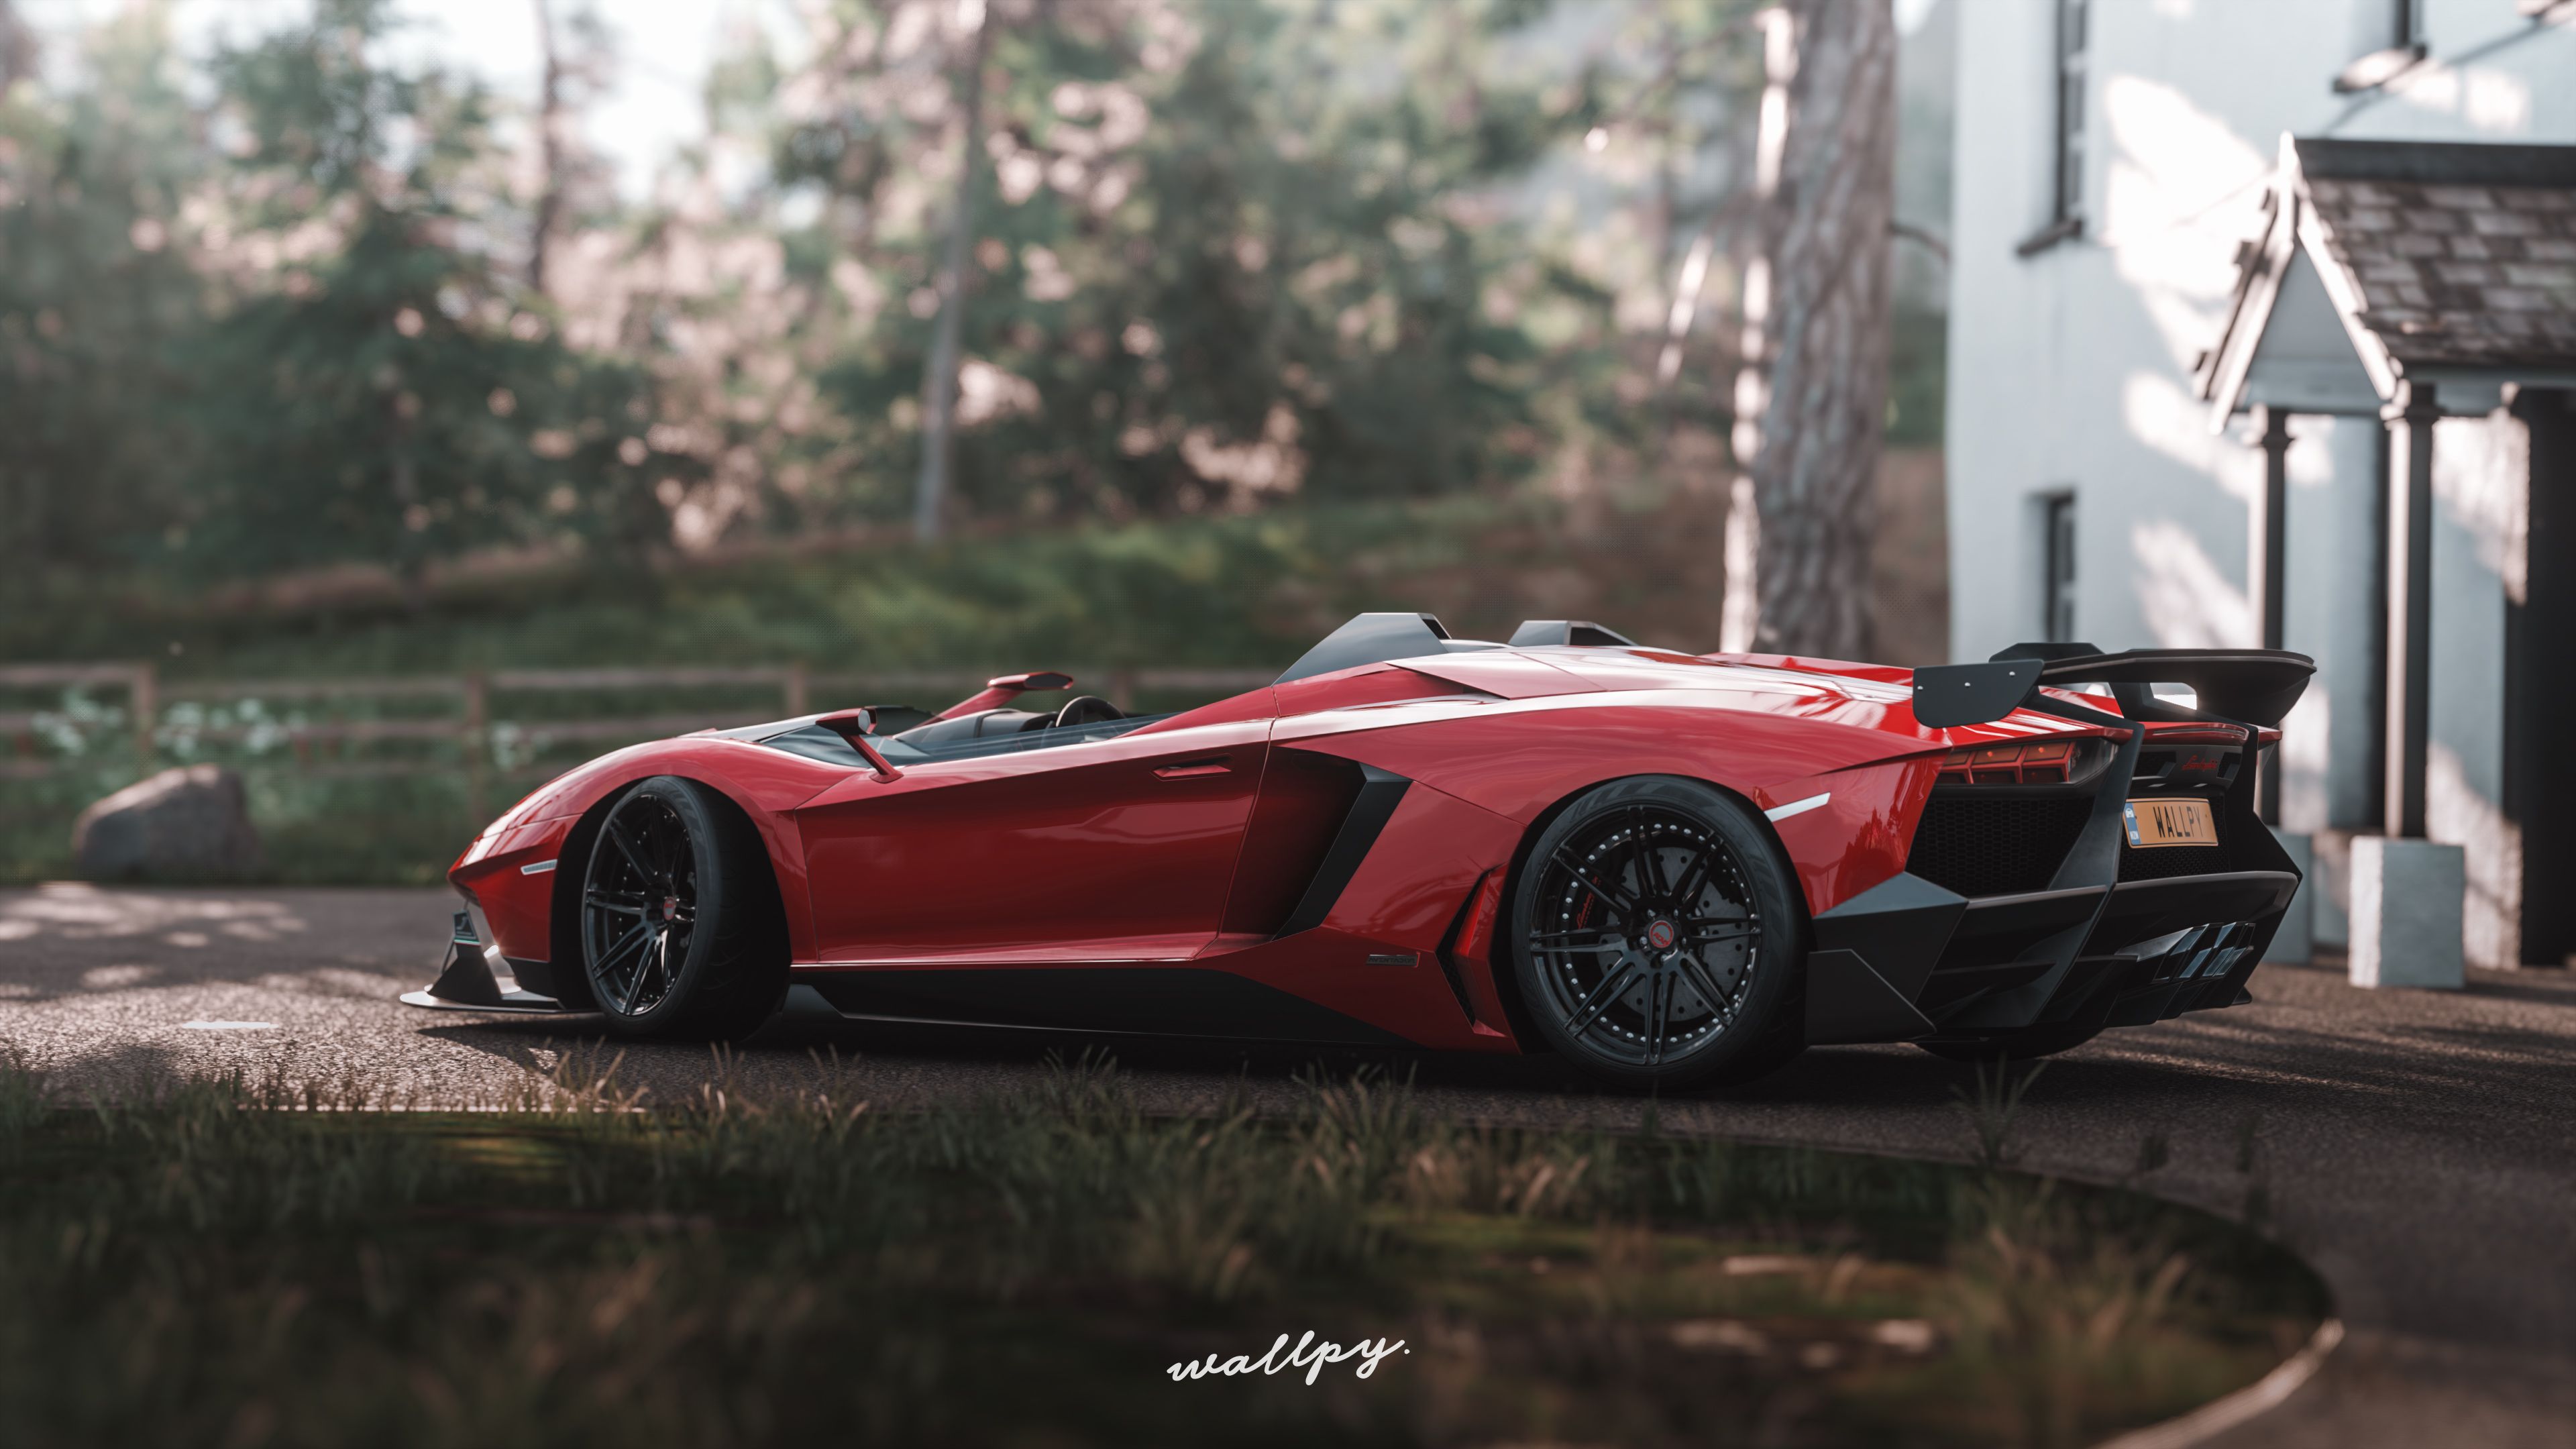 Lamborghini Aventador Sv Forza Horizon 4k, HD Games, 4k Wallpaper, Image, Background, Photo and Picture